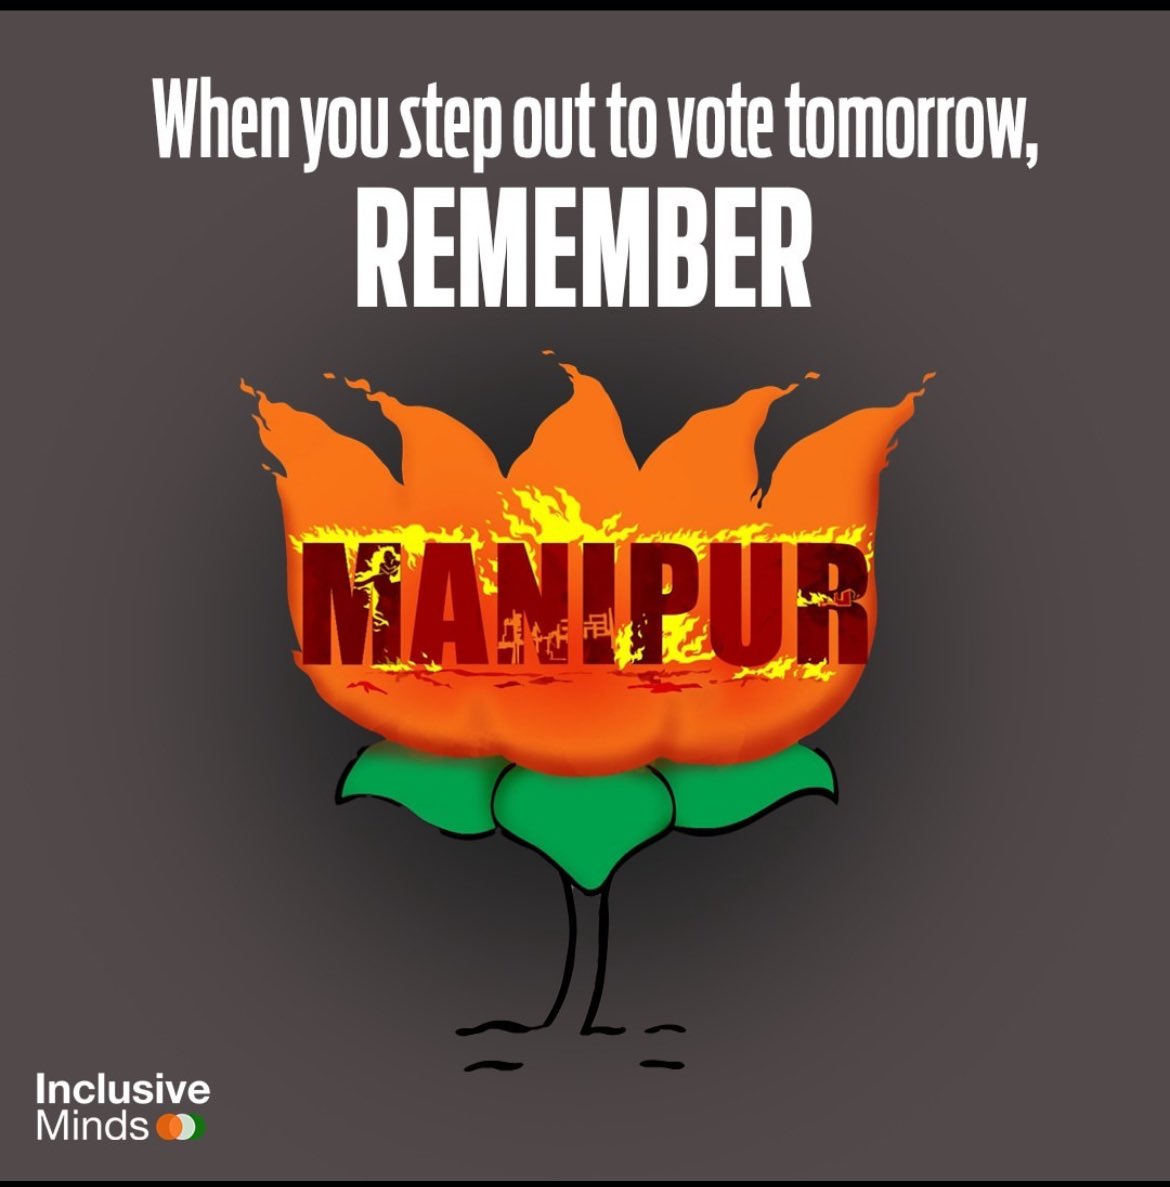 Remember #Manipur

#SayNoVoteForBJP
#HaathBadlegaHaalaat 
#IWCForNyay